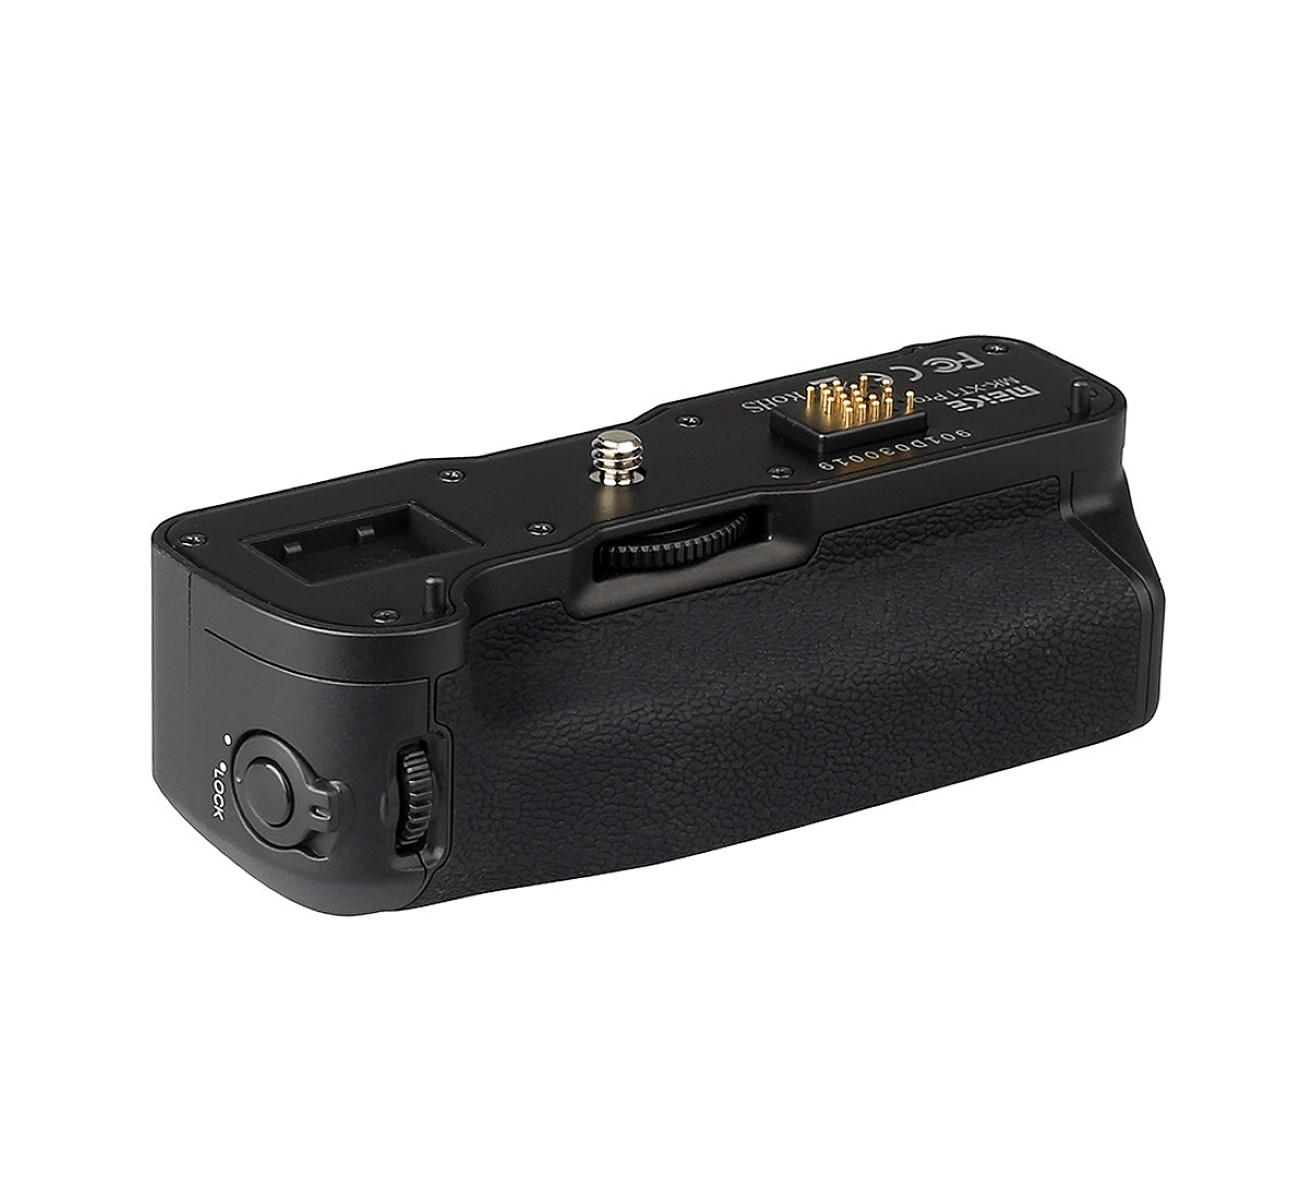 MEIKE Batteriegriff Fujifilm X-T1 Batteriegriff mit VG-XT1, Funk-Timer-Fernauslöser Black ähnlich Funk-Timer-Fernauslöser, mit